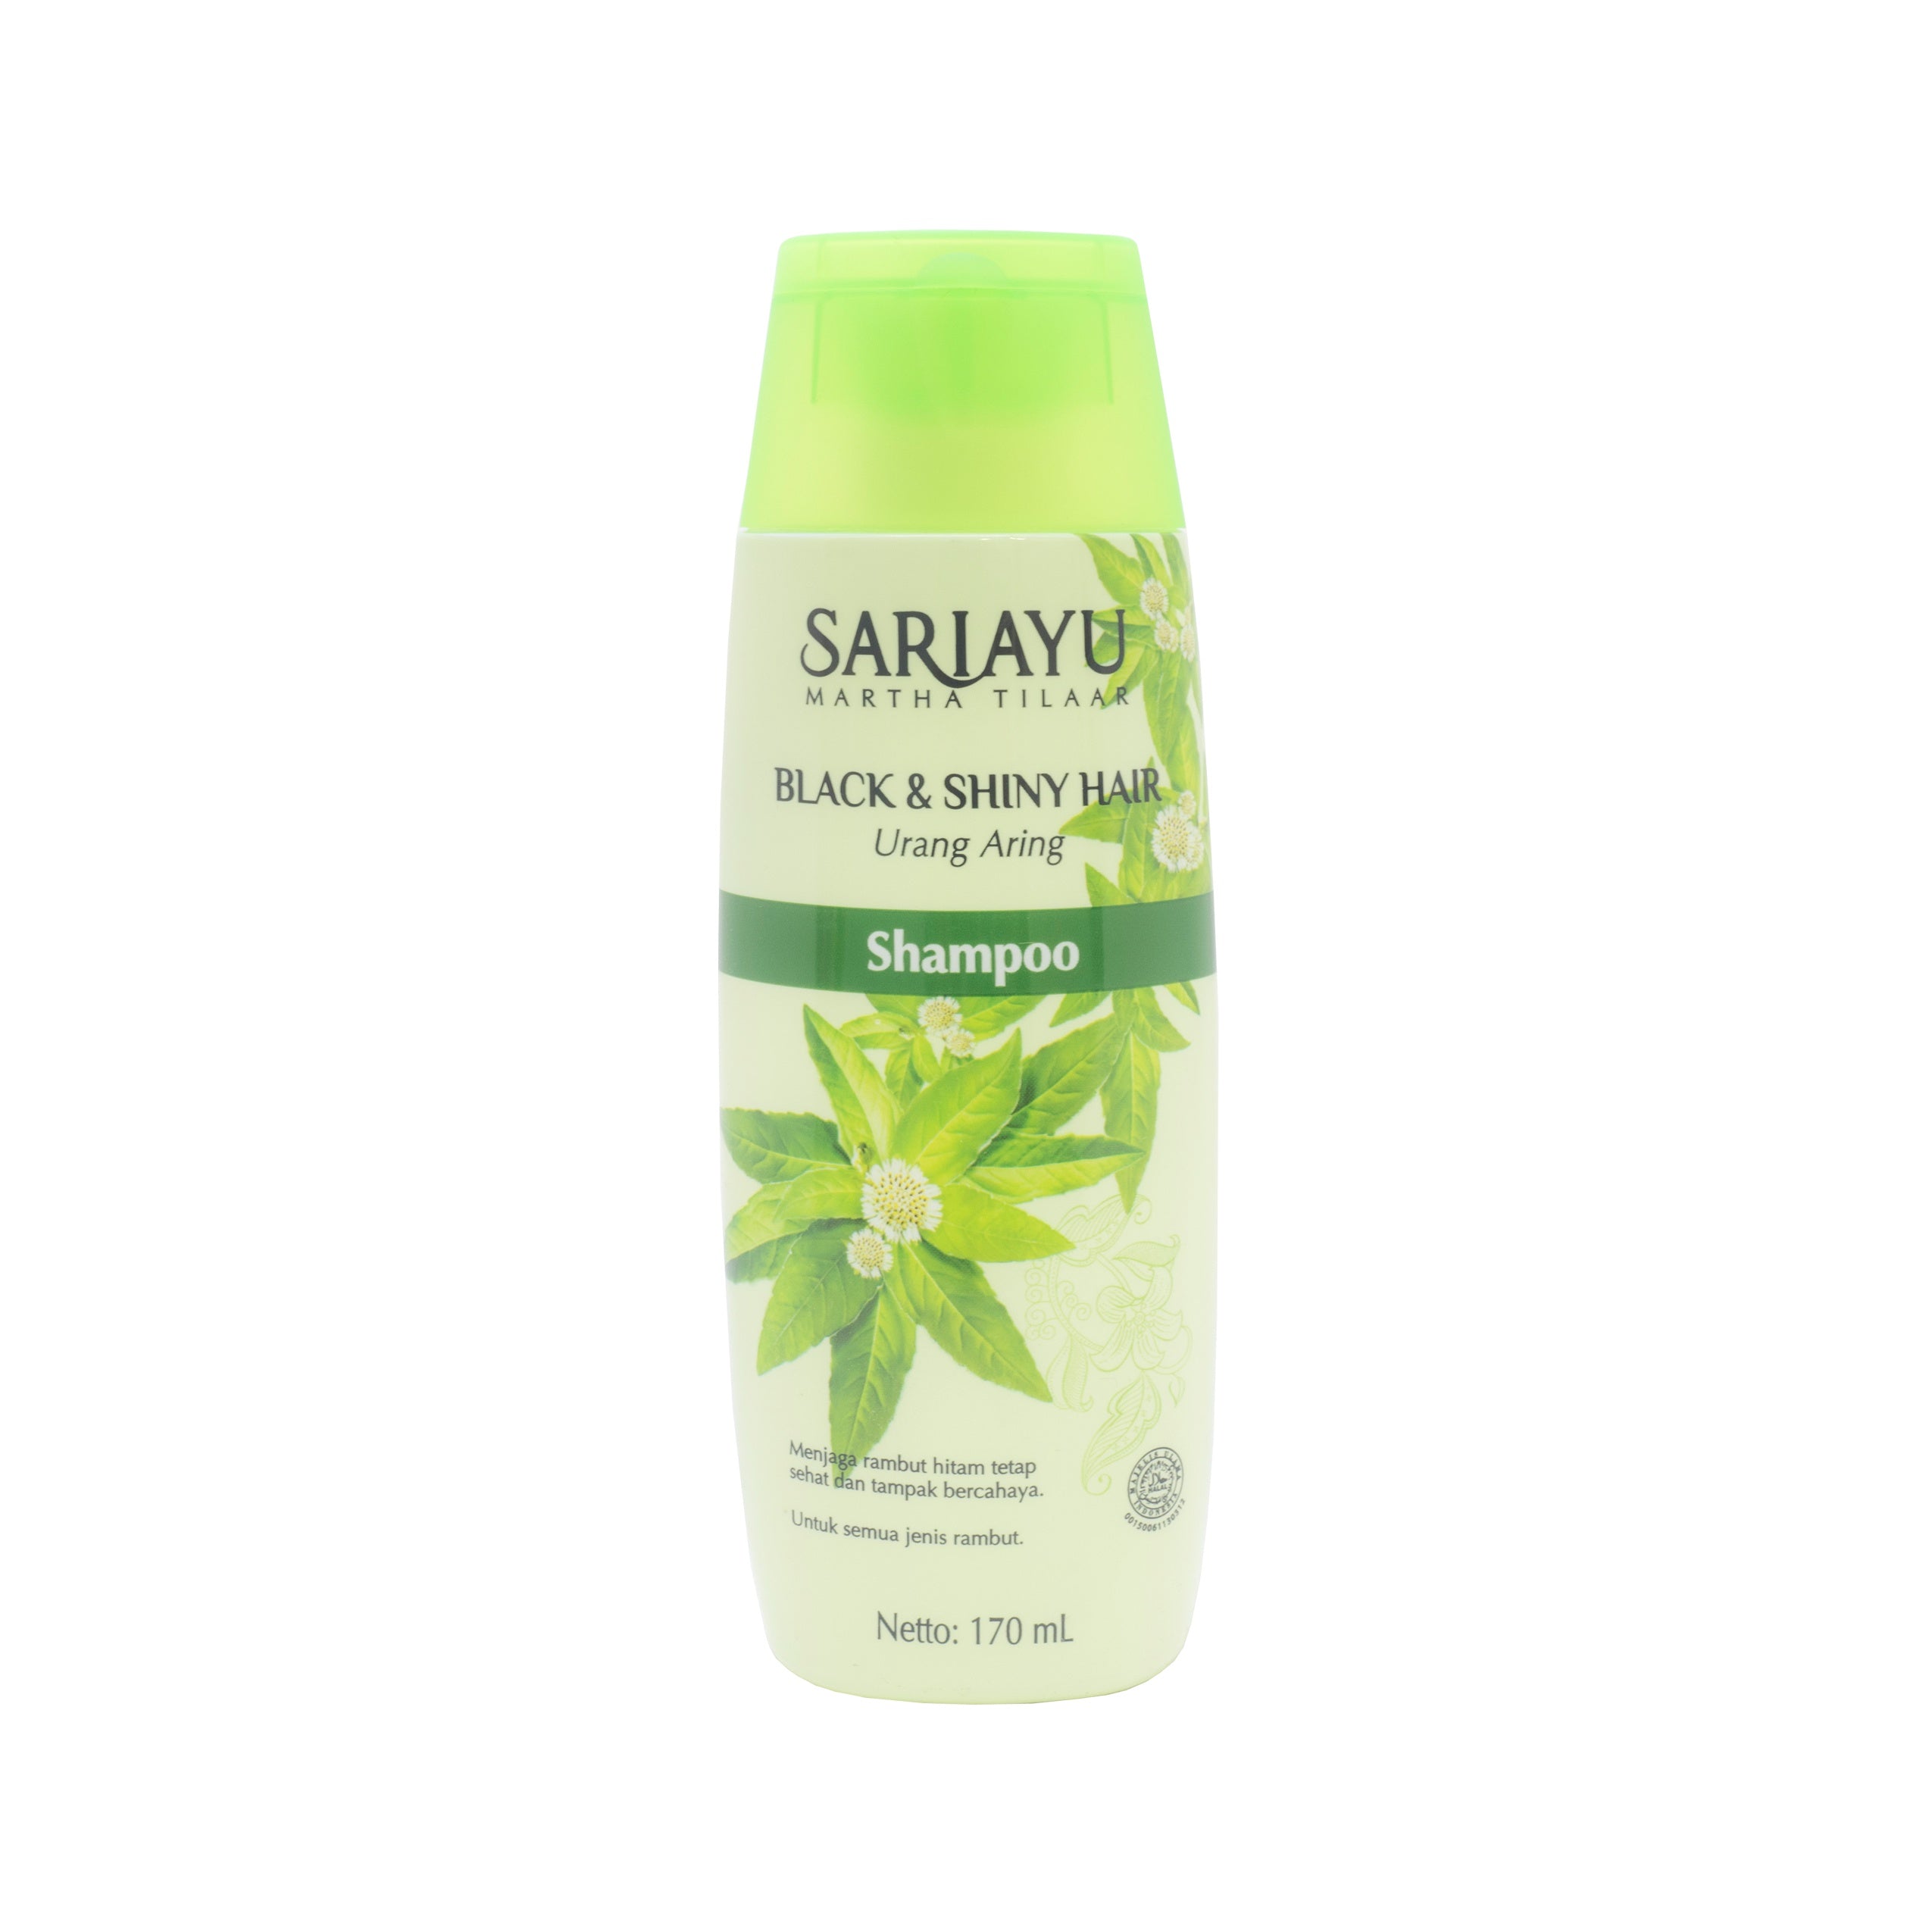 Sariayu, Shampoo Urang Aring (Black & Shiny Hair), 170 ml